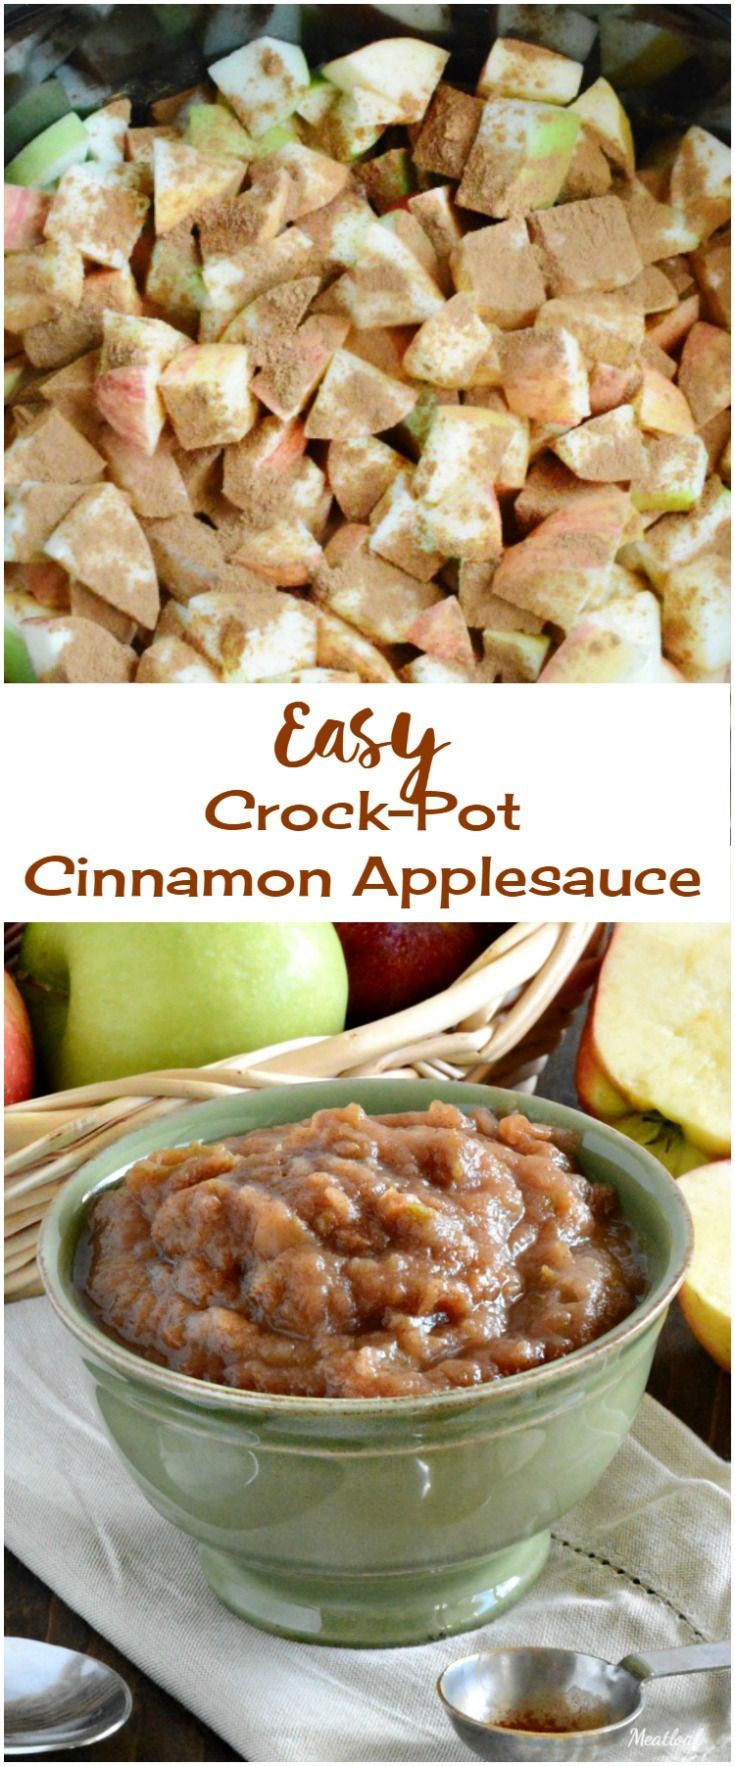 Healthy Crockpot Side Dishes
 Homemade Crock Pot Cinnamon Applesauce Recipe